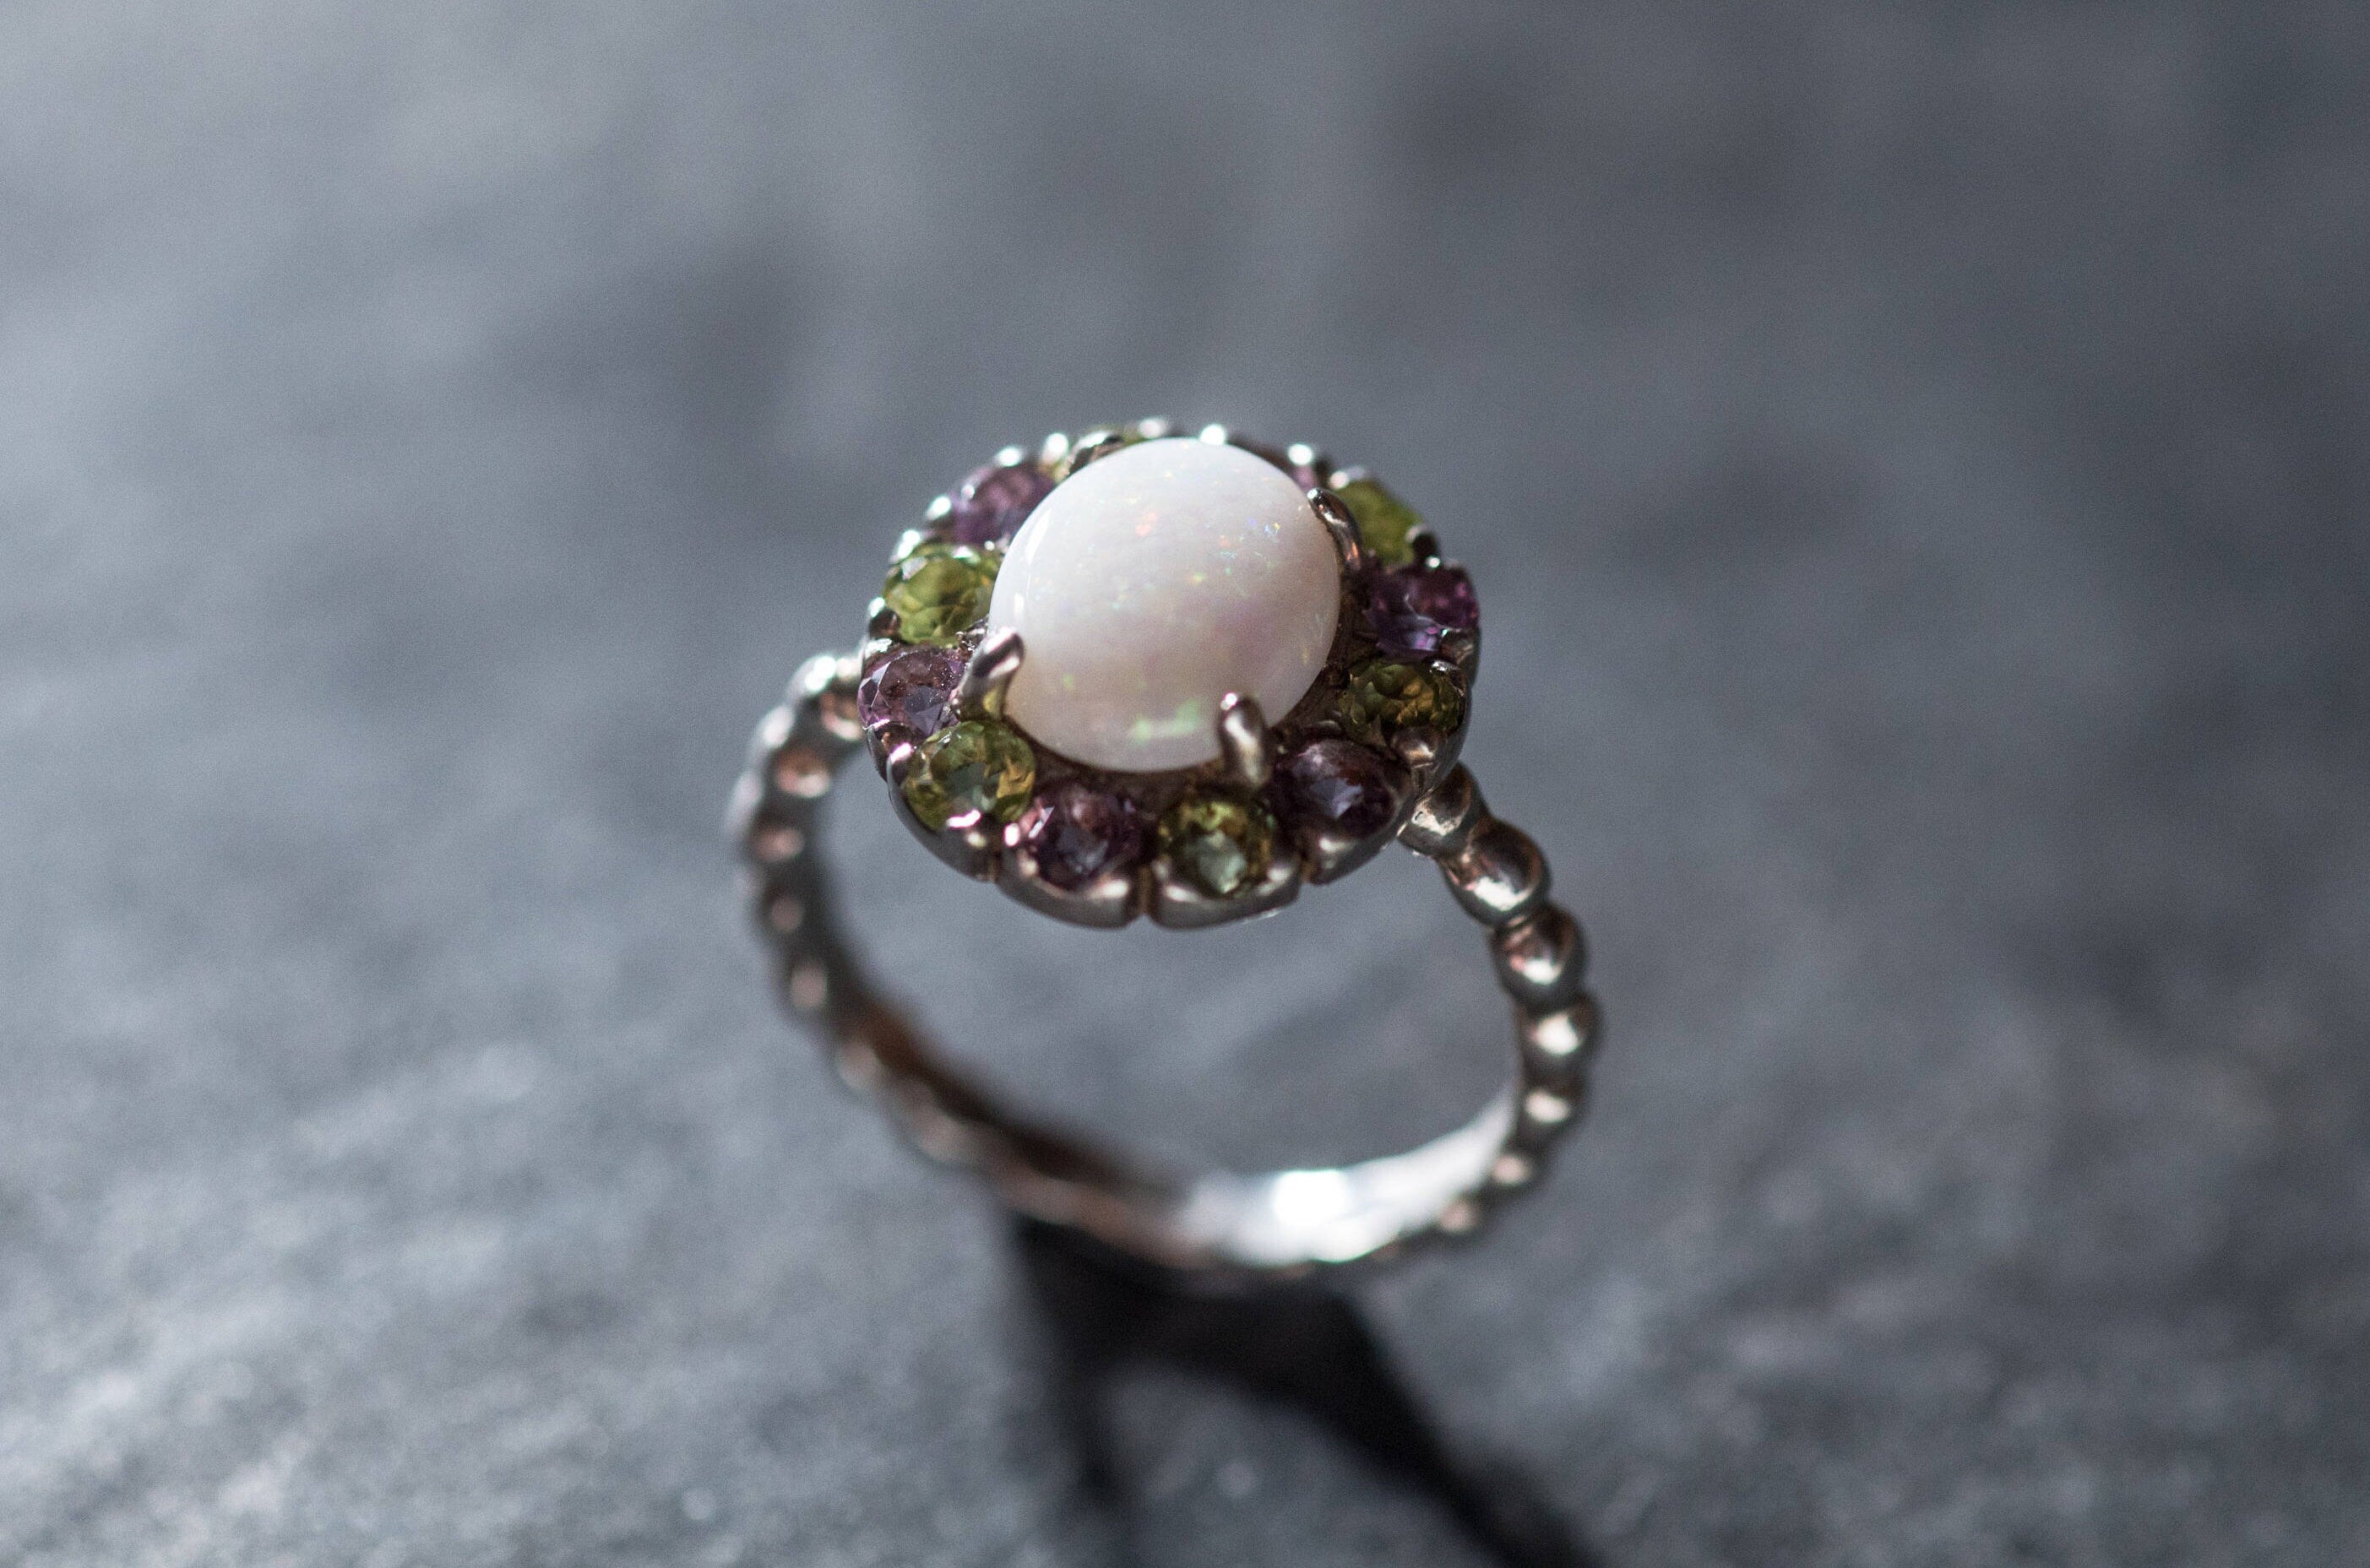 Opal Ring, Australian Opal, Natural Opal, Amethyst Ring, Peridot Ring, Vintage Opal Ring, Vintage Ring, October Birthstone,August Birthstone